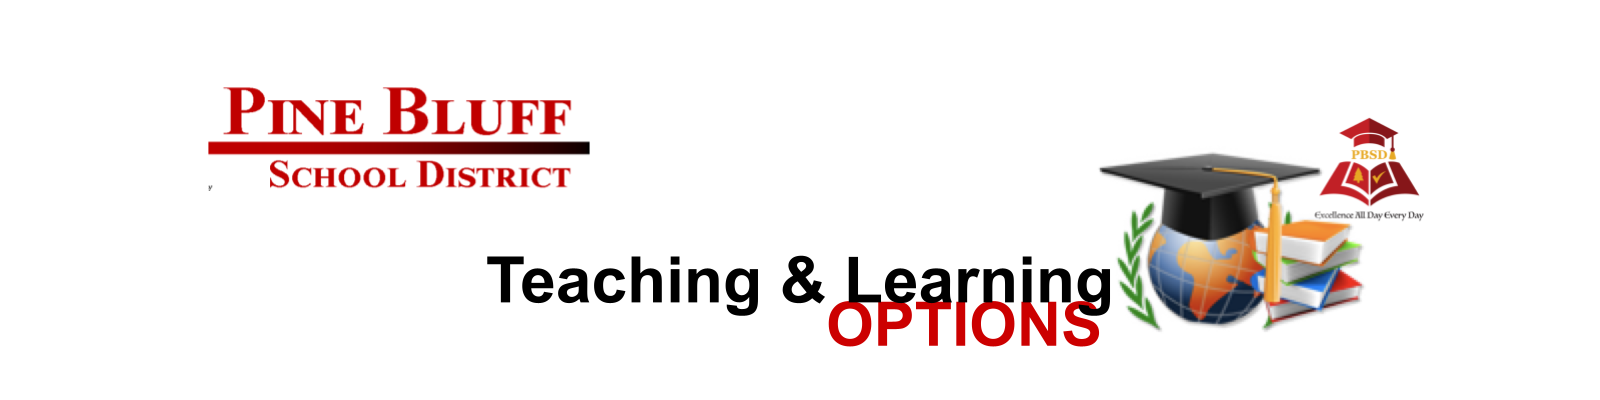 Teaching & Learning Options Header